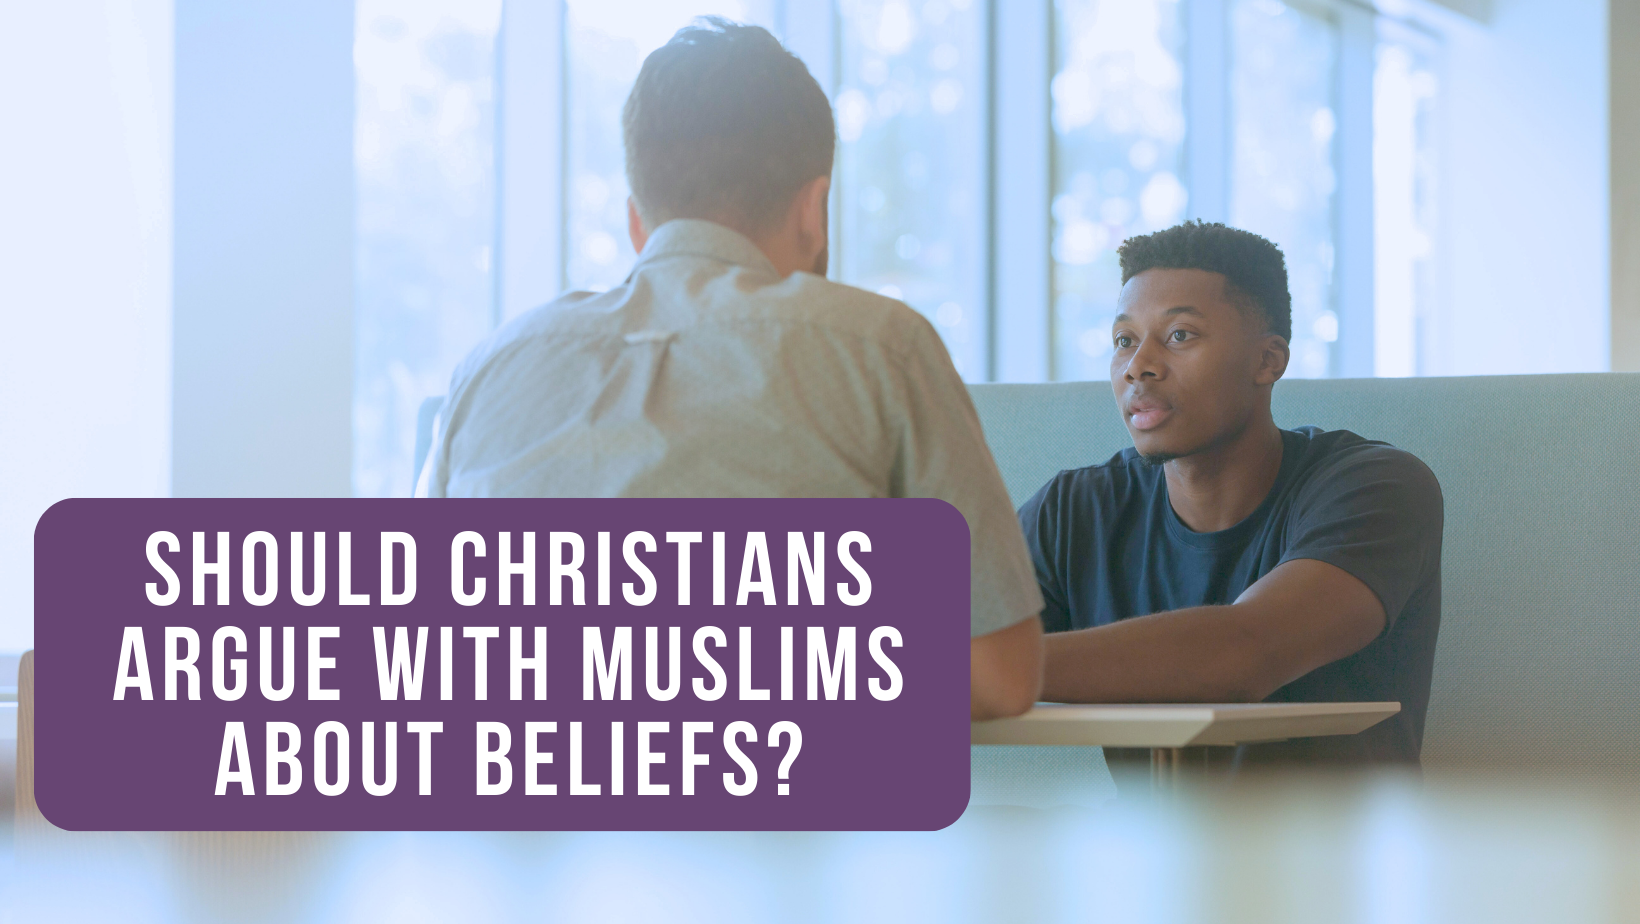 Should Christians argue with Muslims about beliefs?